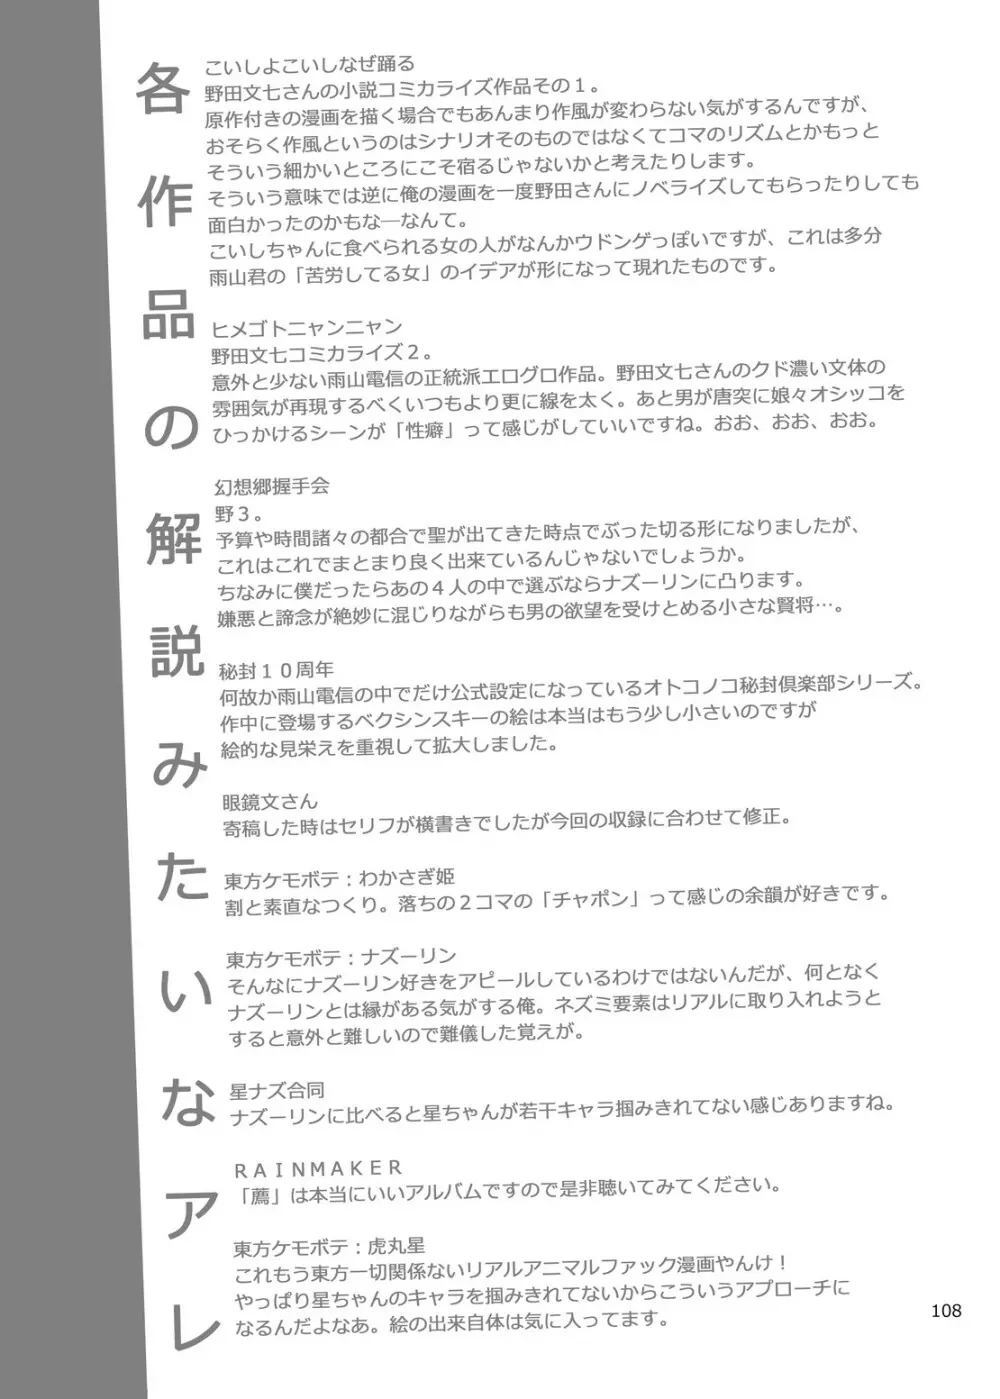 四季報・夏 108ページ